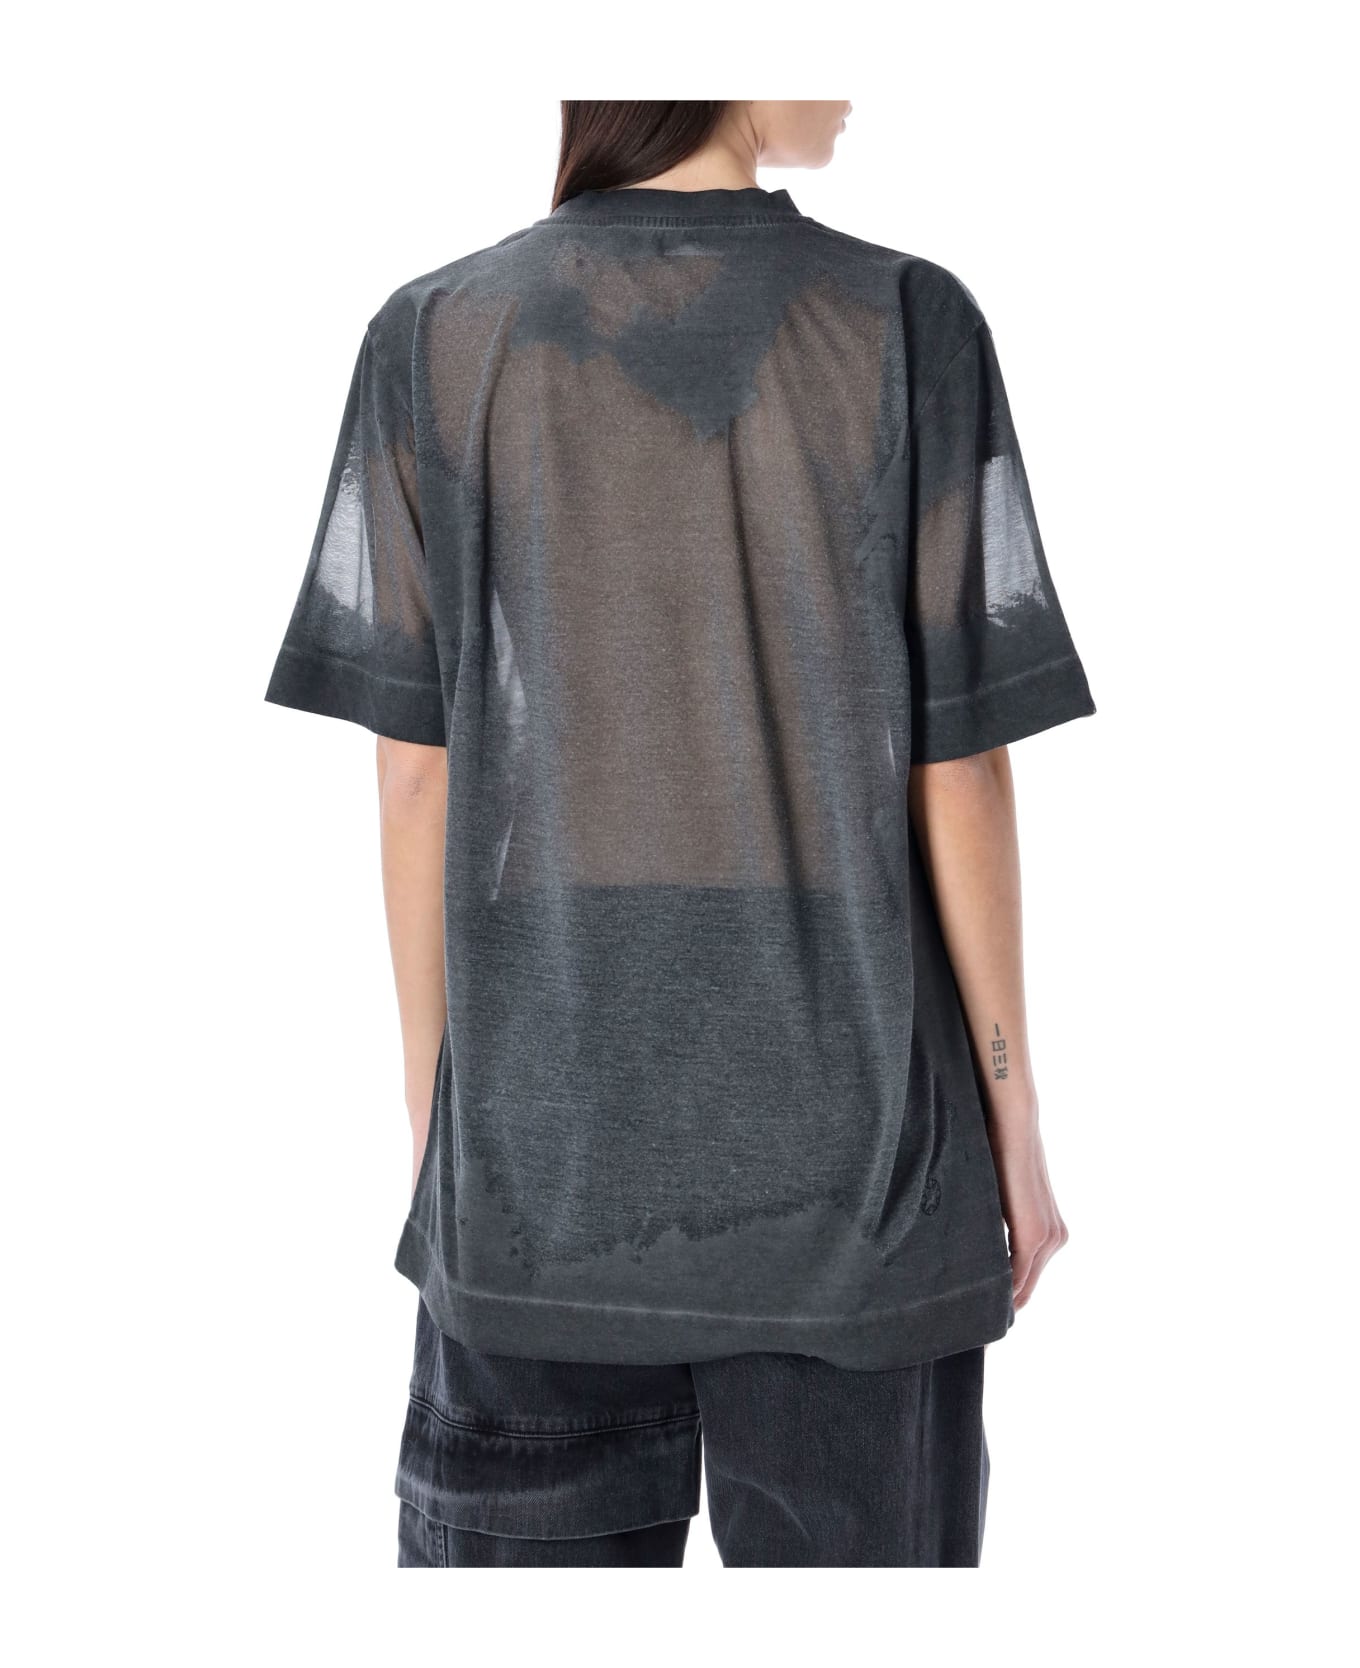 1017 ALYX 9SM Translucent Tee - BLACK Tシャツ